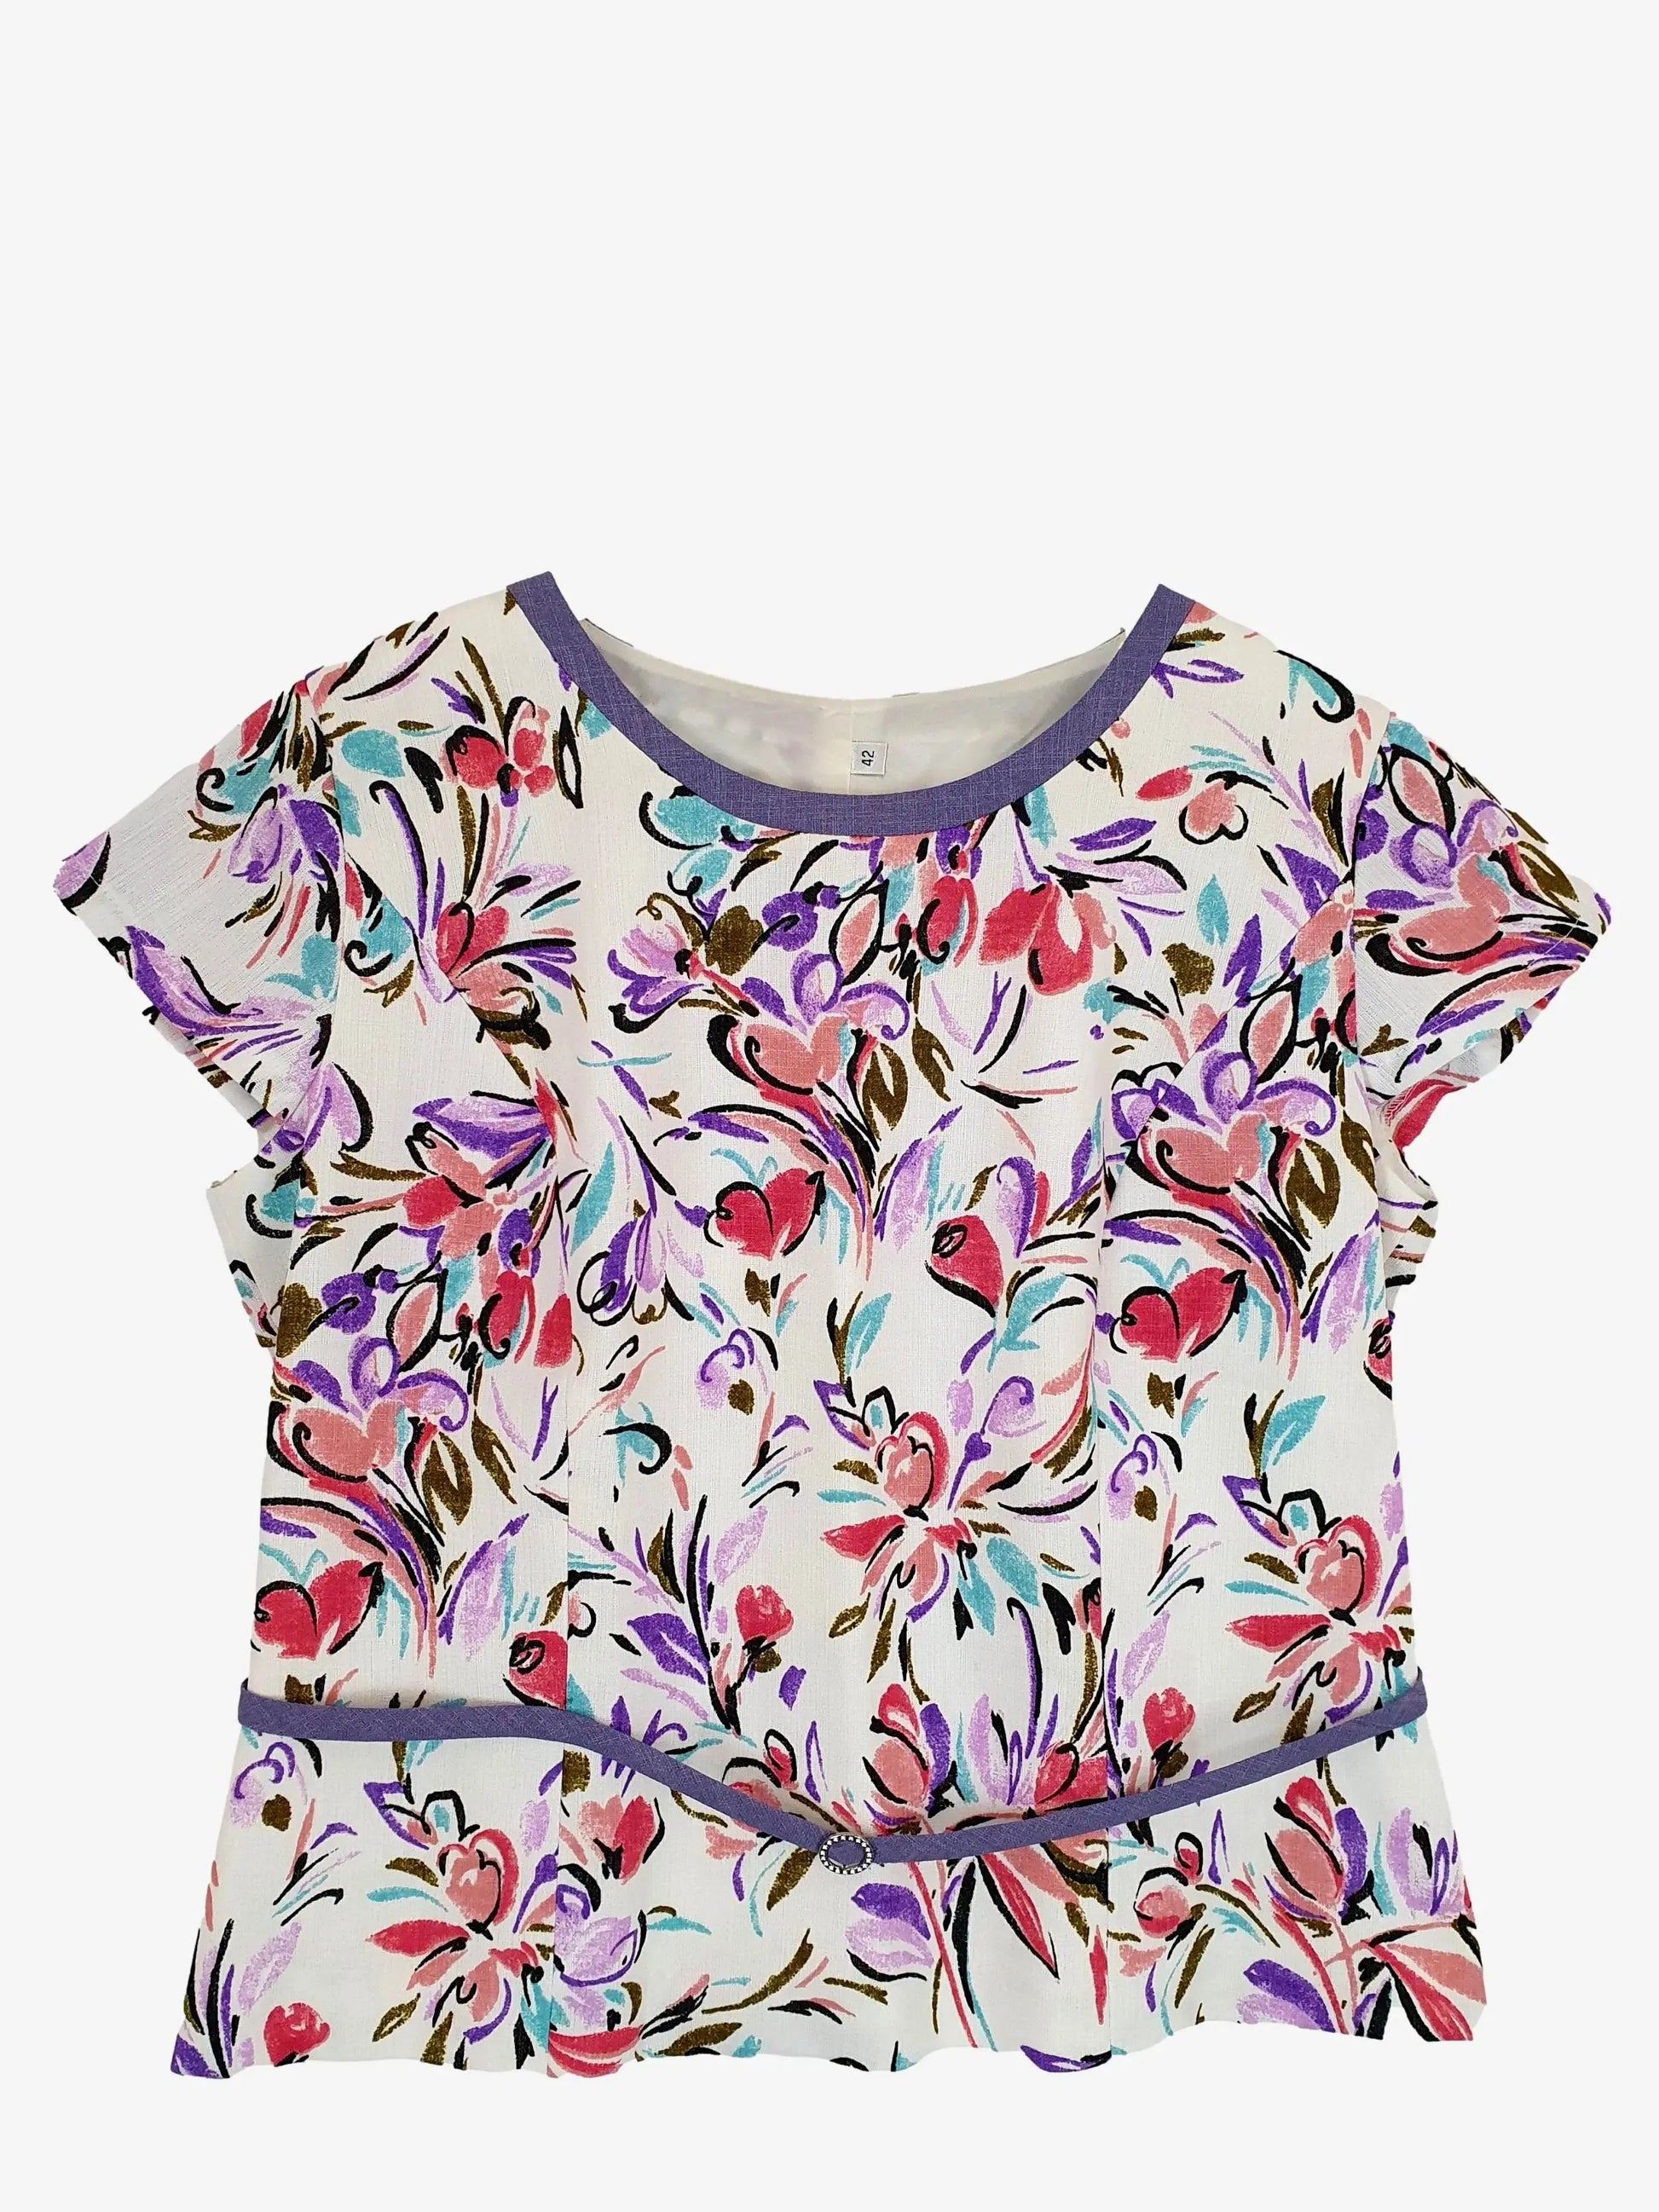 Exclusive Boutique Print Summer Linen Top Size 14 by SwapUp-Second Hand Shop-Thrift Store-Op Shop 